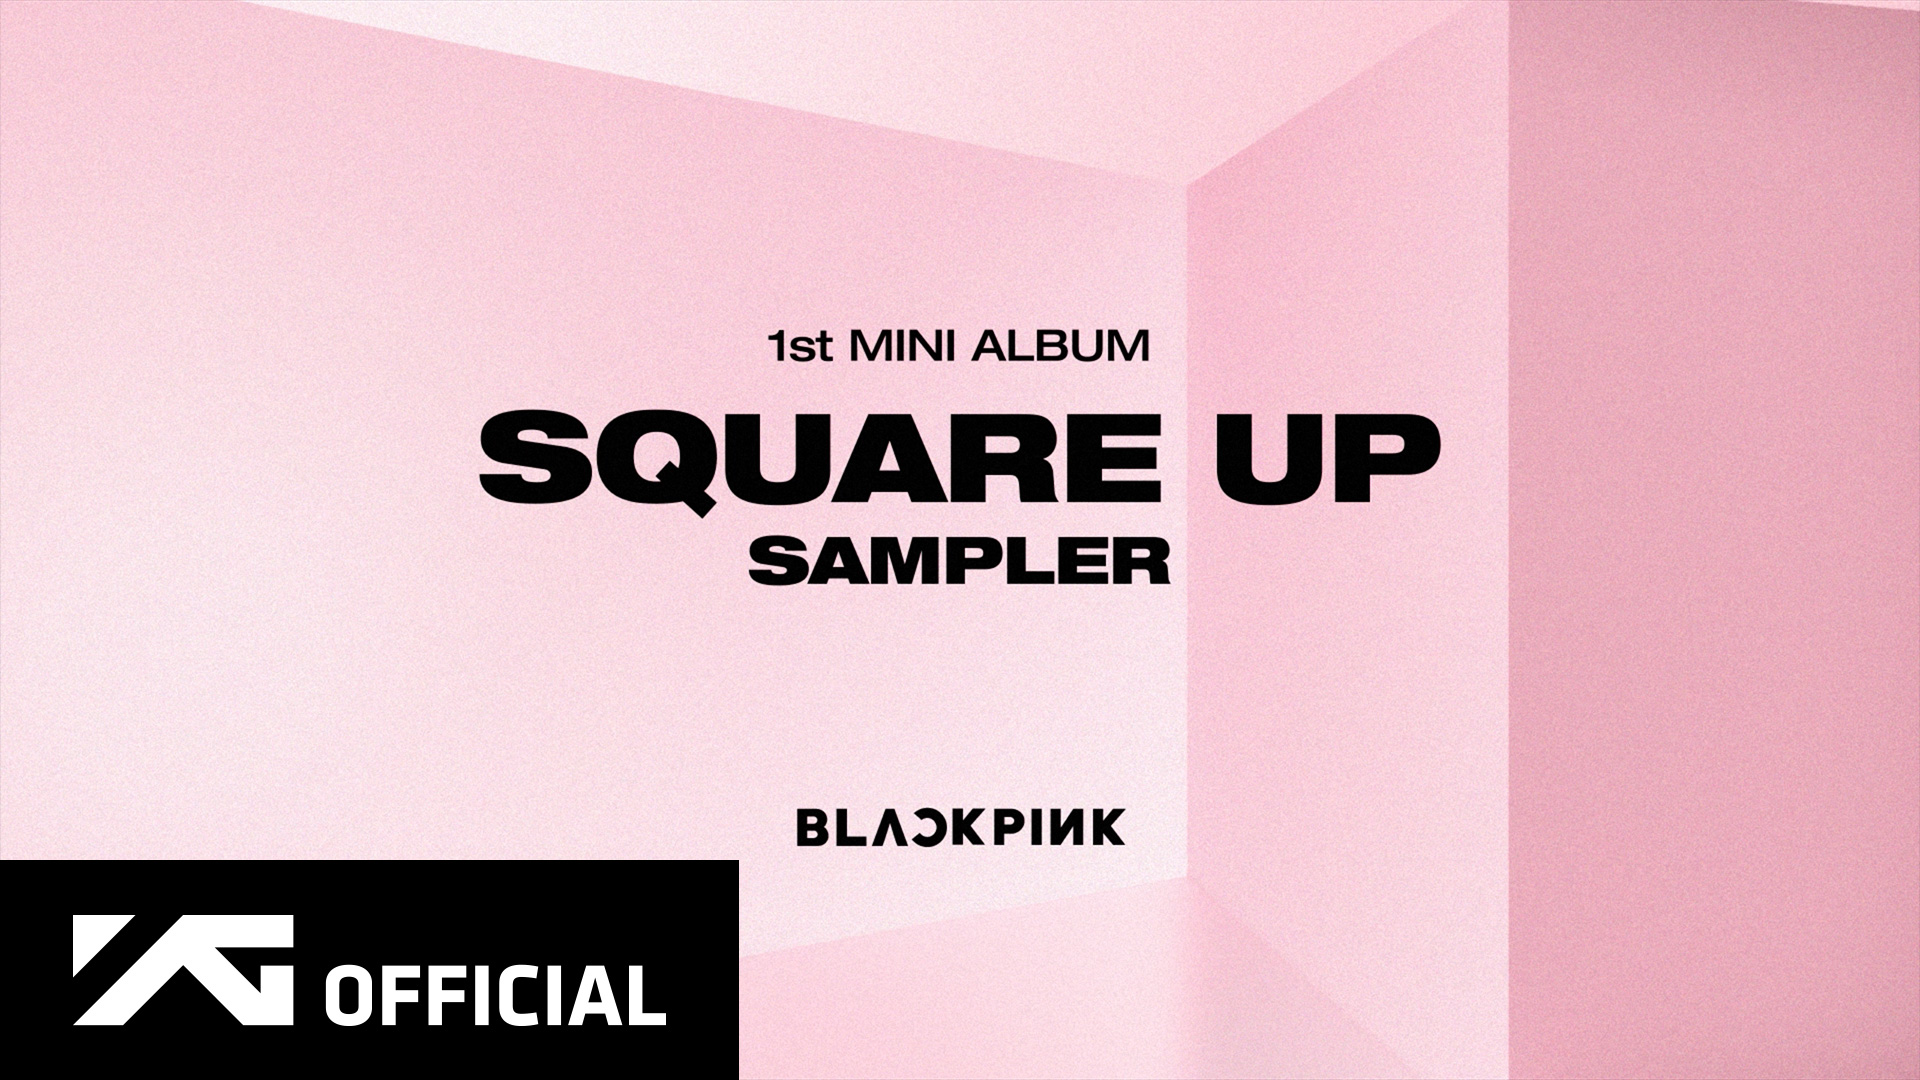 BLACKPINK - 1st MINI ALBUM 'SQUARE UP' SAMPLER